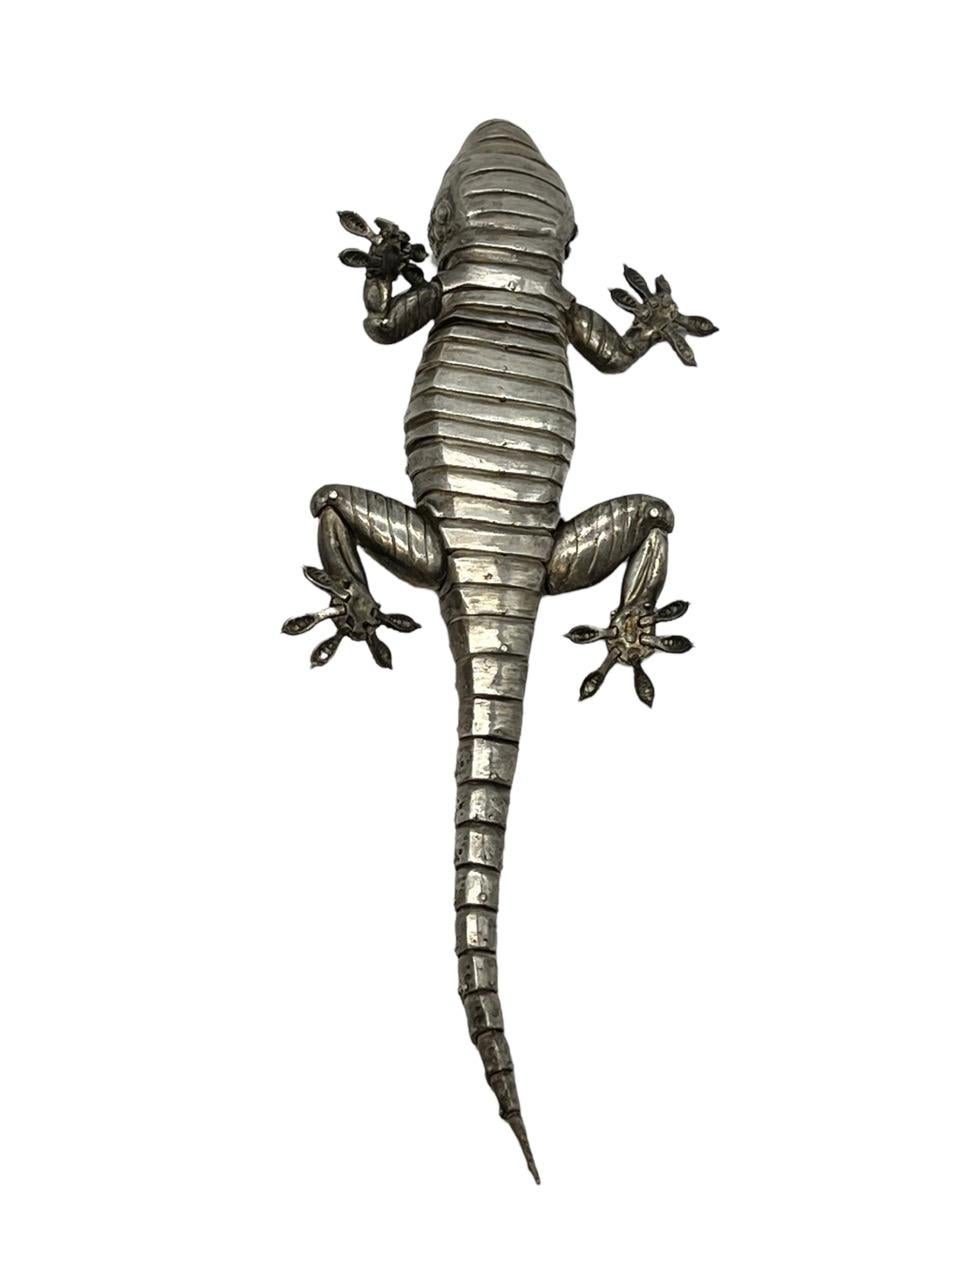 Oleg Konstantinov Fully Articulated Gecko Made of Sterling Silver 7